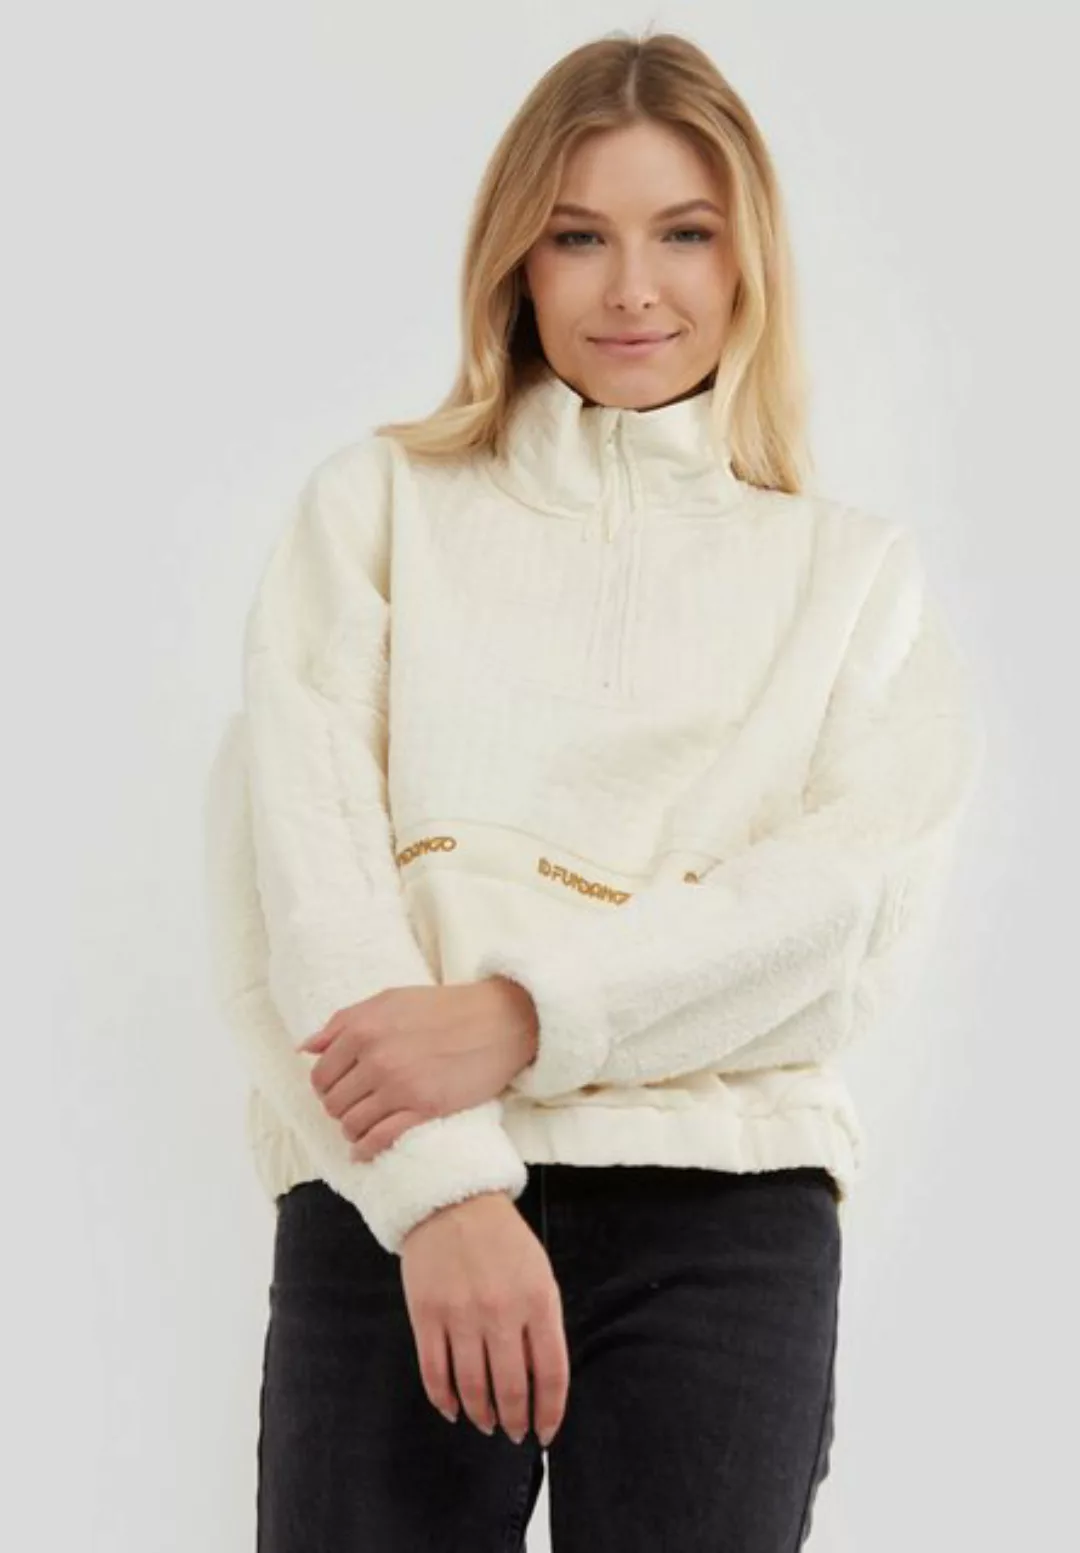 Fundango Sweatshirt Calypso hybrid pullover, fleece, stand up collar, windp günstig online kaufen